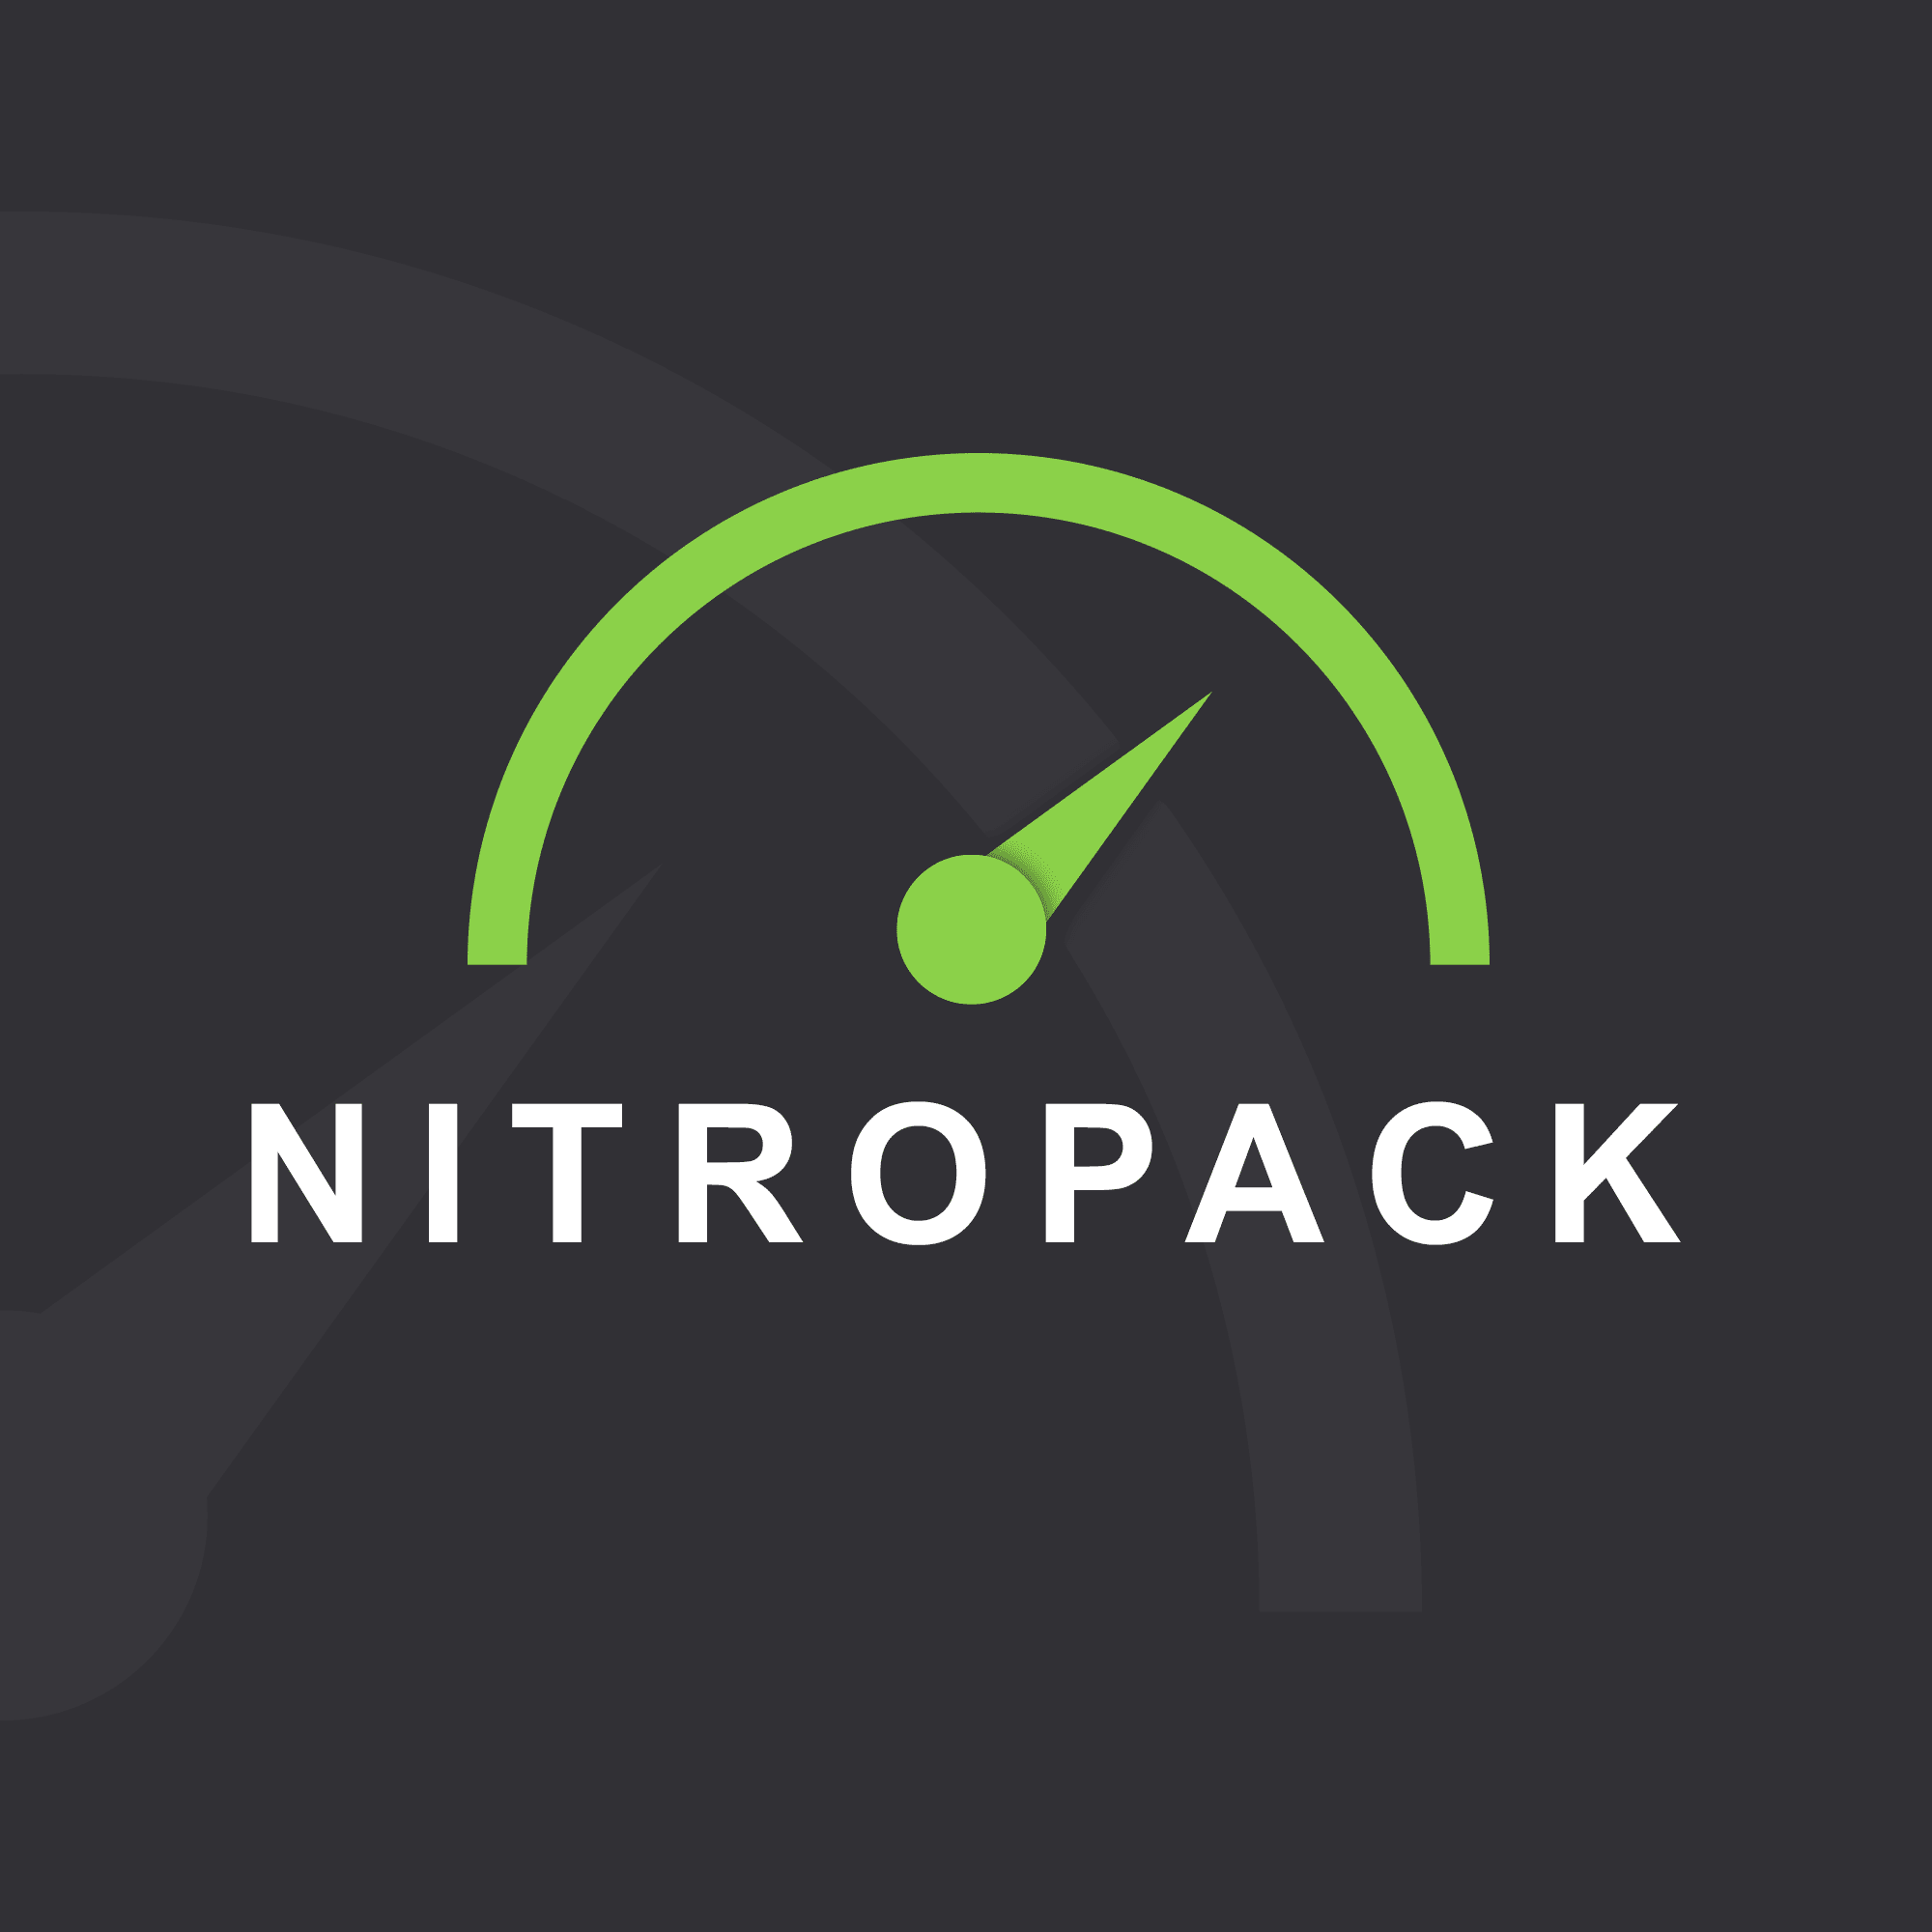 NitroPACK Plugin for WordPress sites